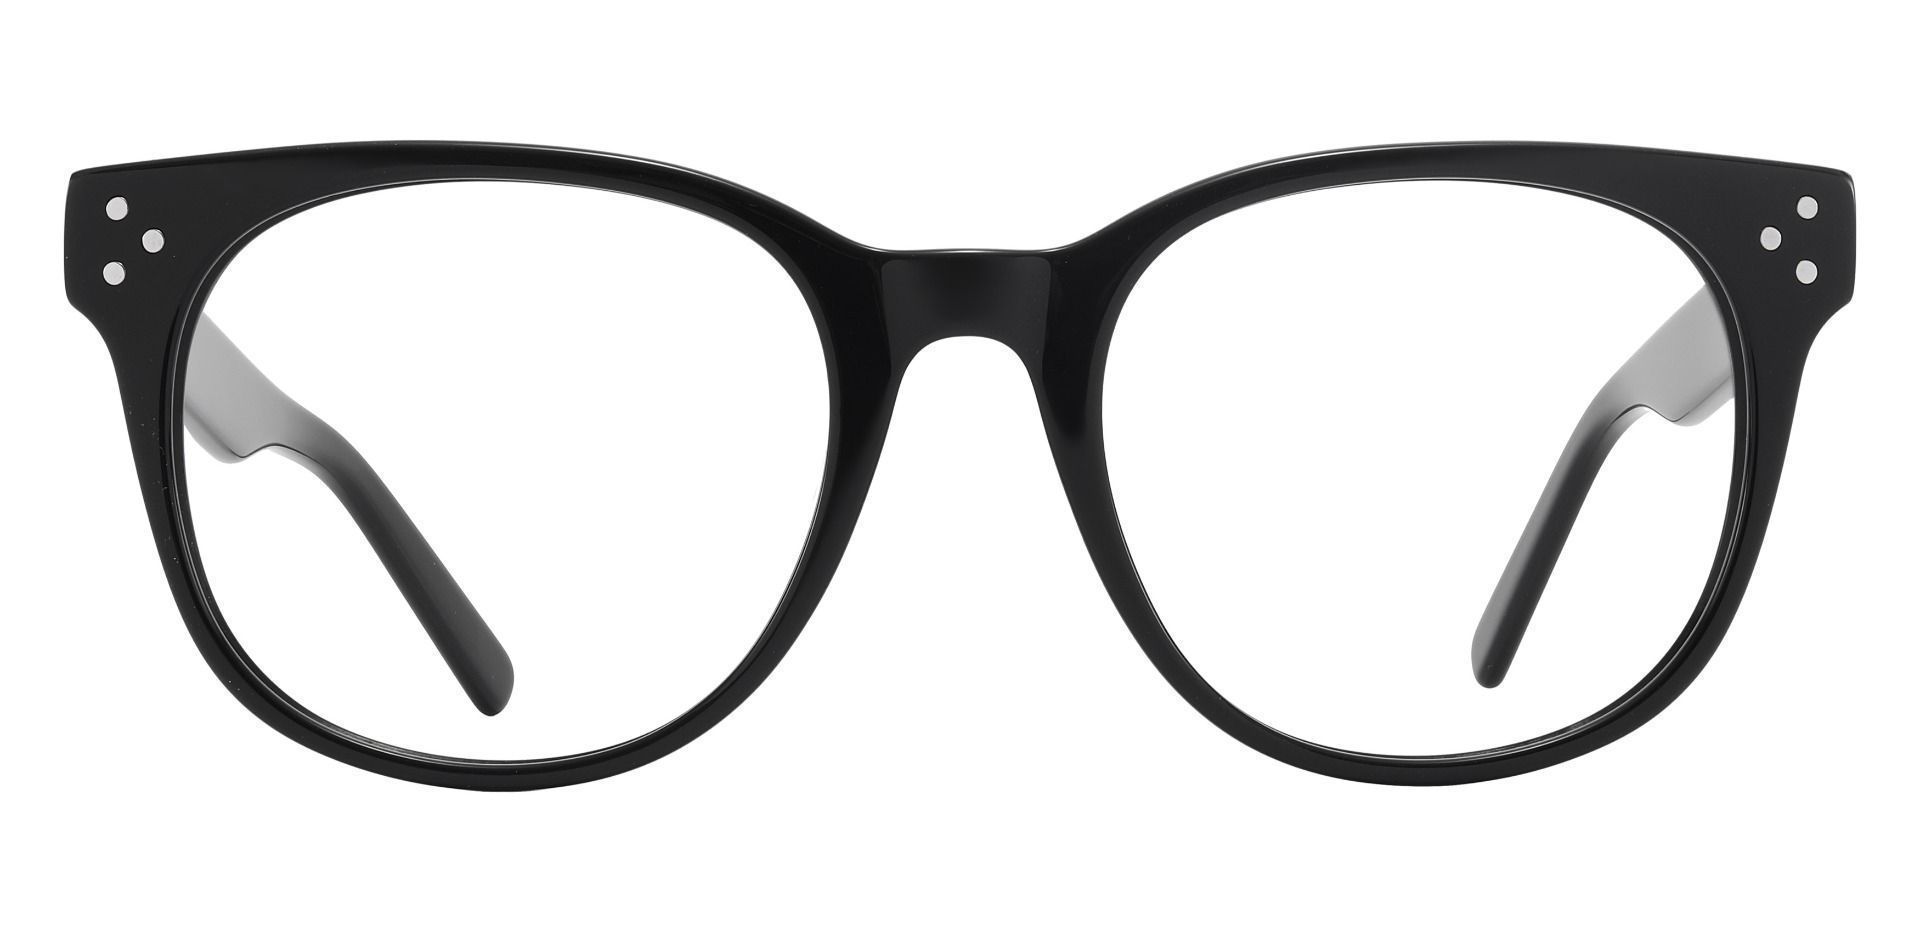 Orwell Oval Progressive Glasses - Black